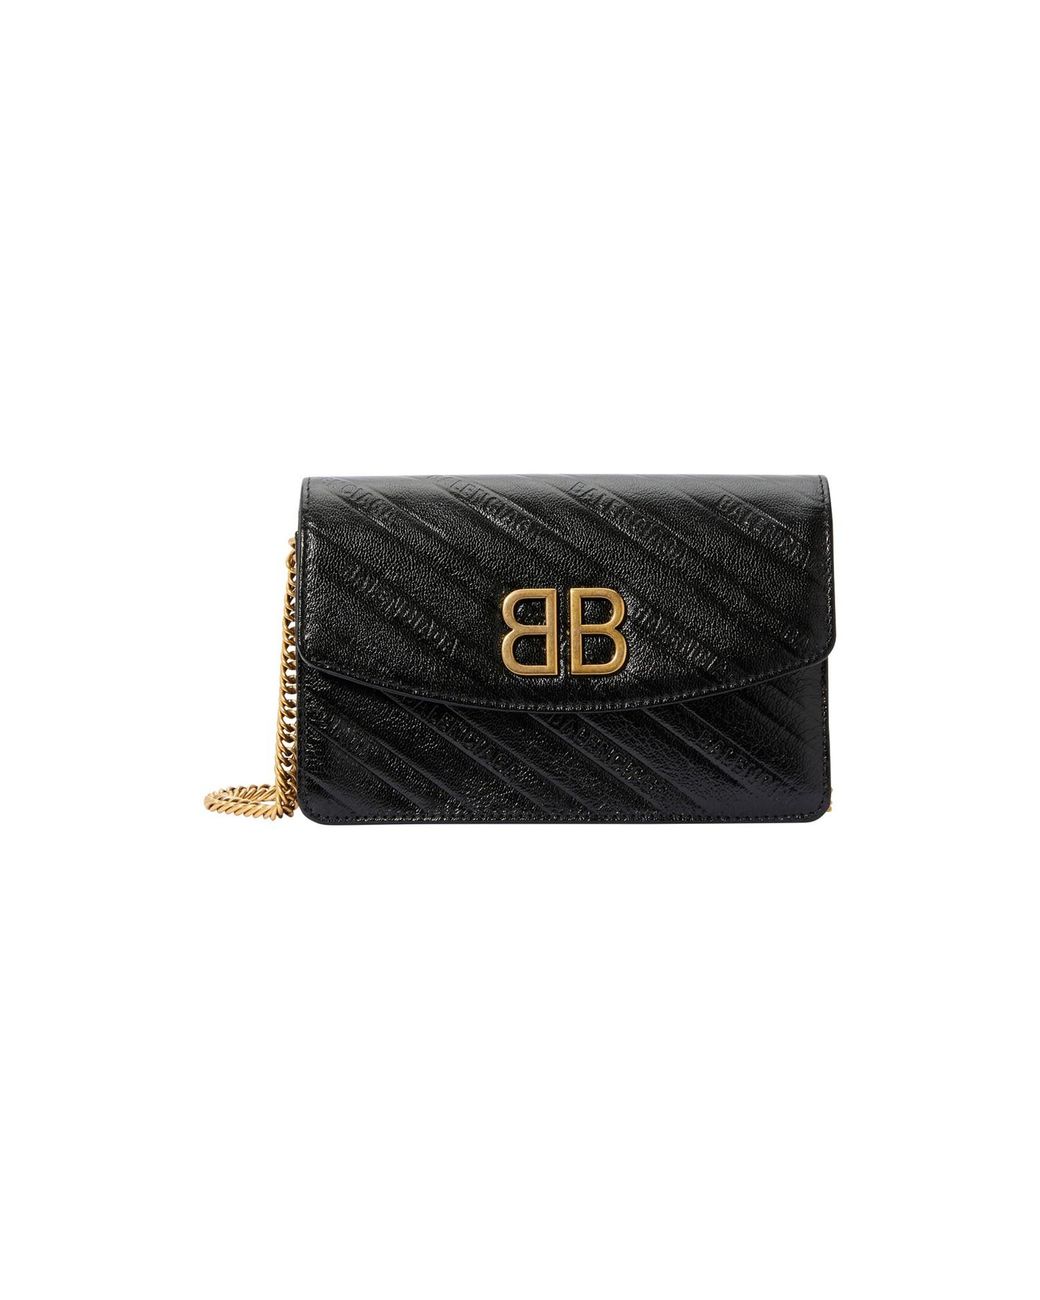 Balenciaga Bb Wallet With Chain in Black | Lyst